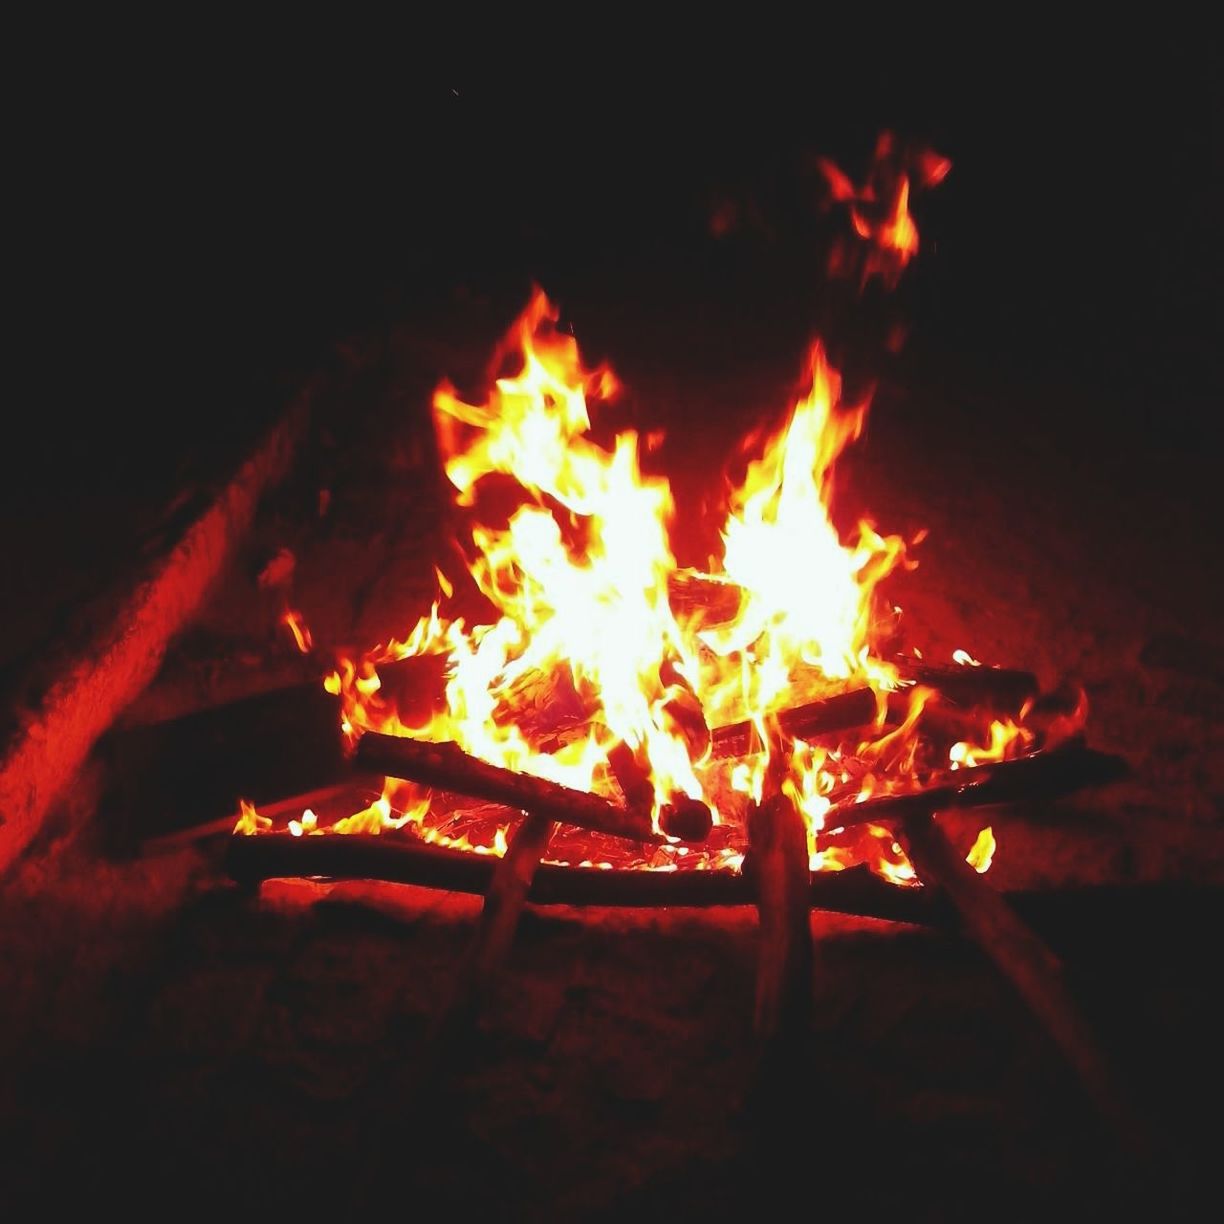 flame, burning, fire - natural phenomenon, heat - temperature, night, glowing, firewood, bonfire, fire, illuminated, heat, campfire, dark, close-up, orange color, lit, motion, indoors, candle, light - natural phenomenon